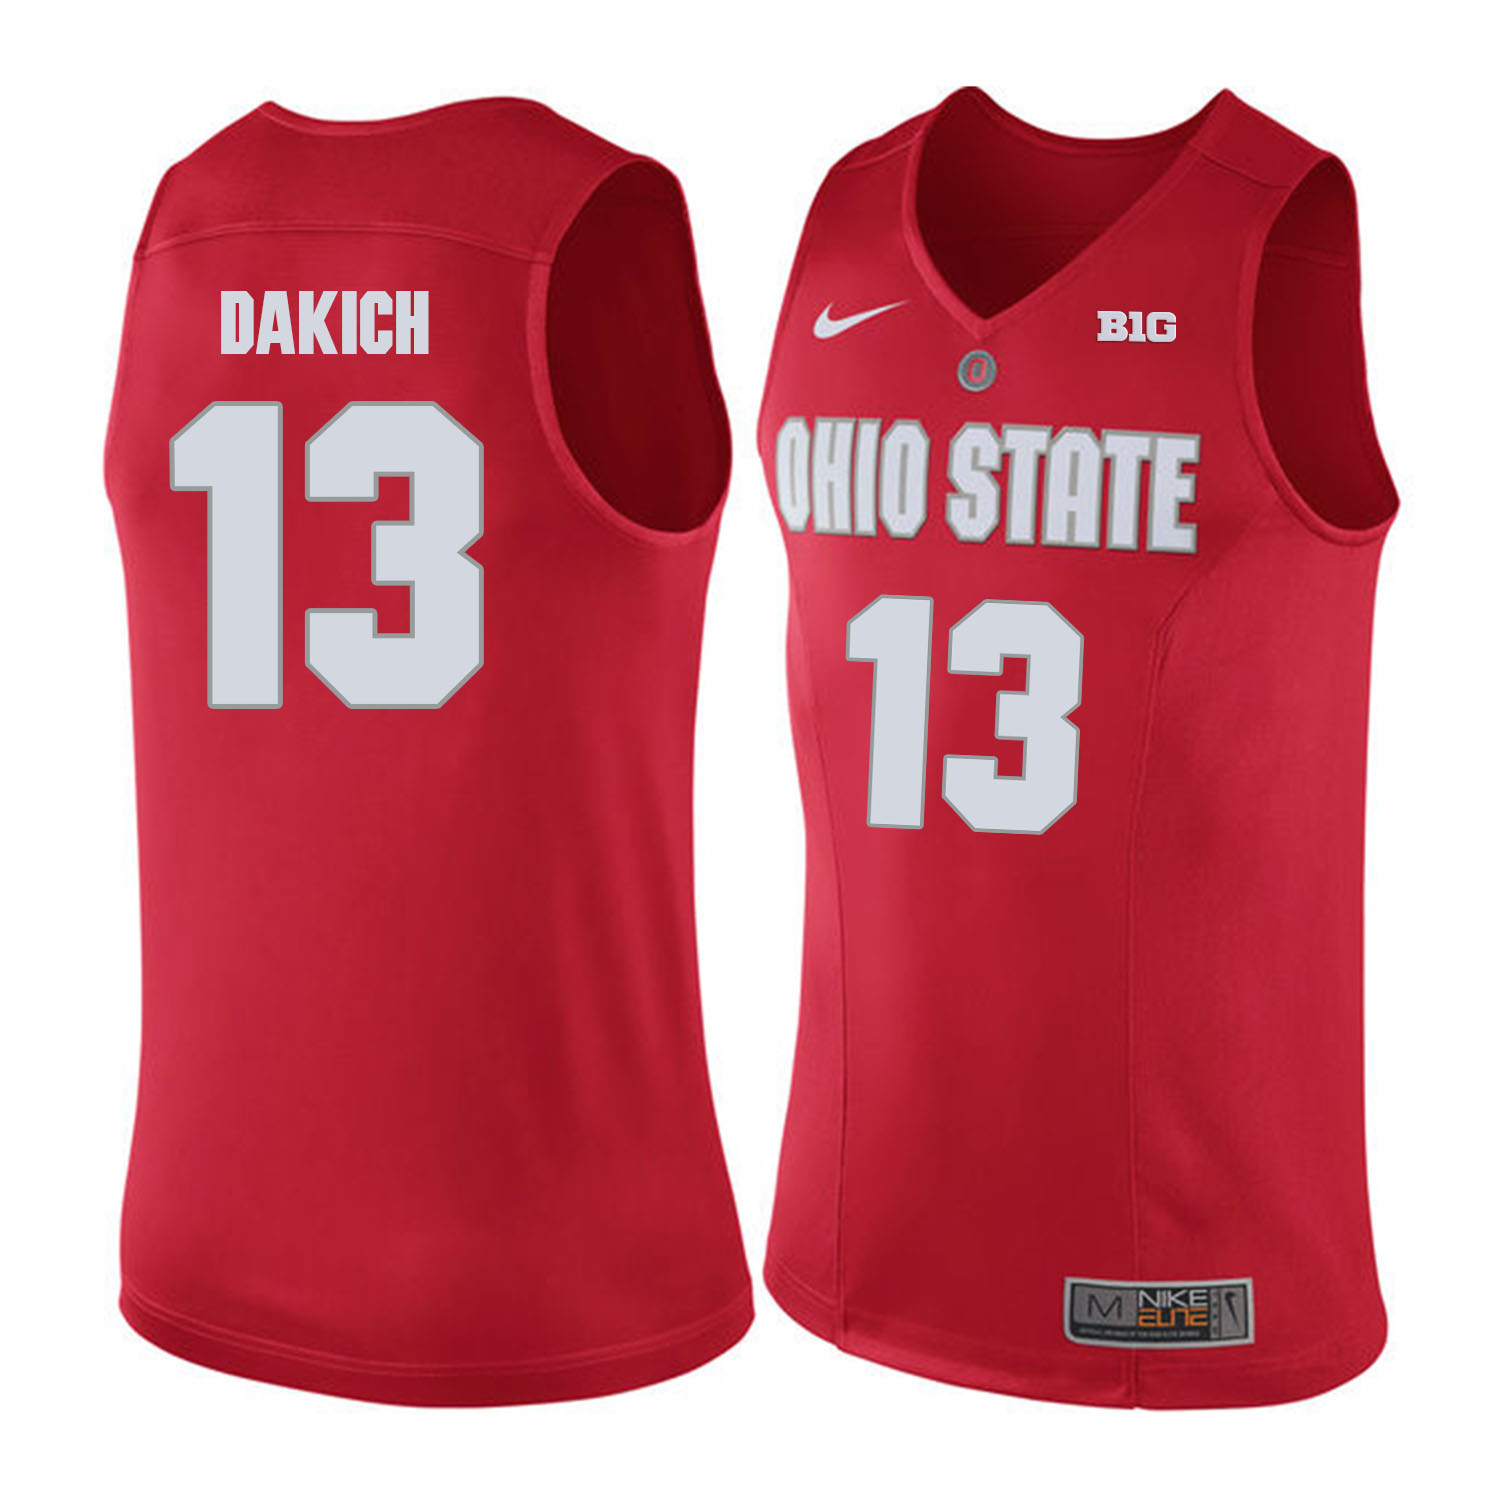 Ohio State Buckeyes 13 Andrew Dakich Red College Basketball Jersey